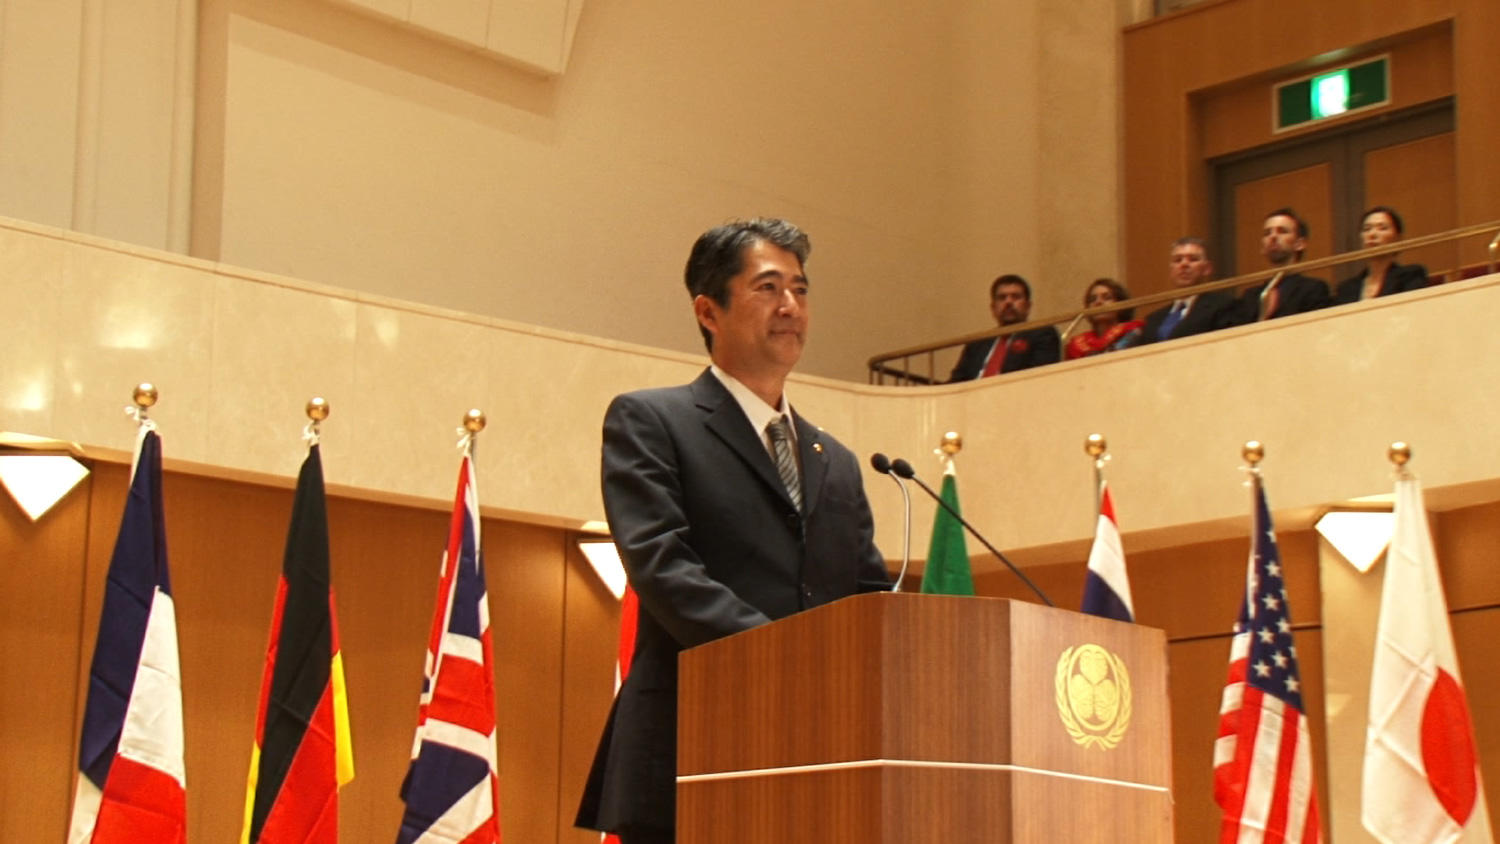 Aida MakotoThe video of a man calling himself Japan's Prime Minister making a speech at an international assembly